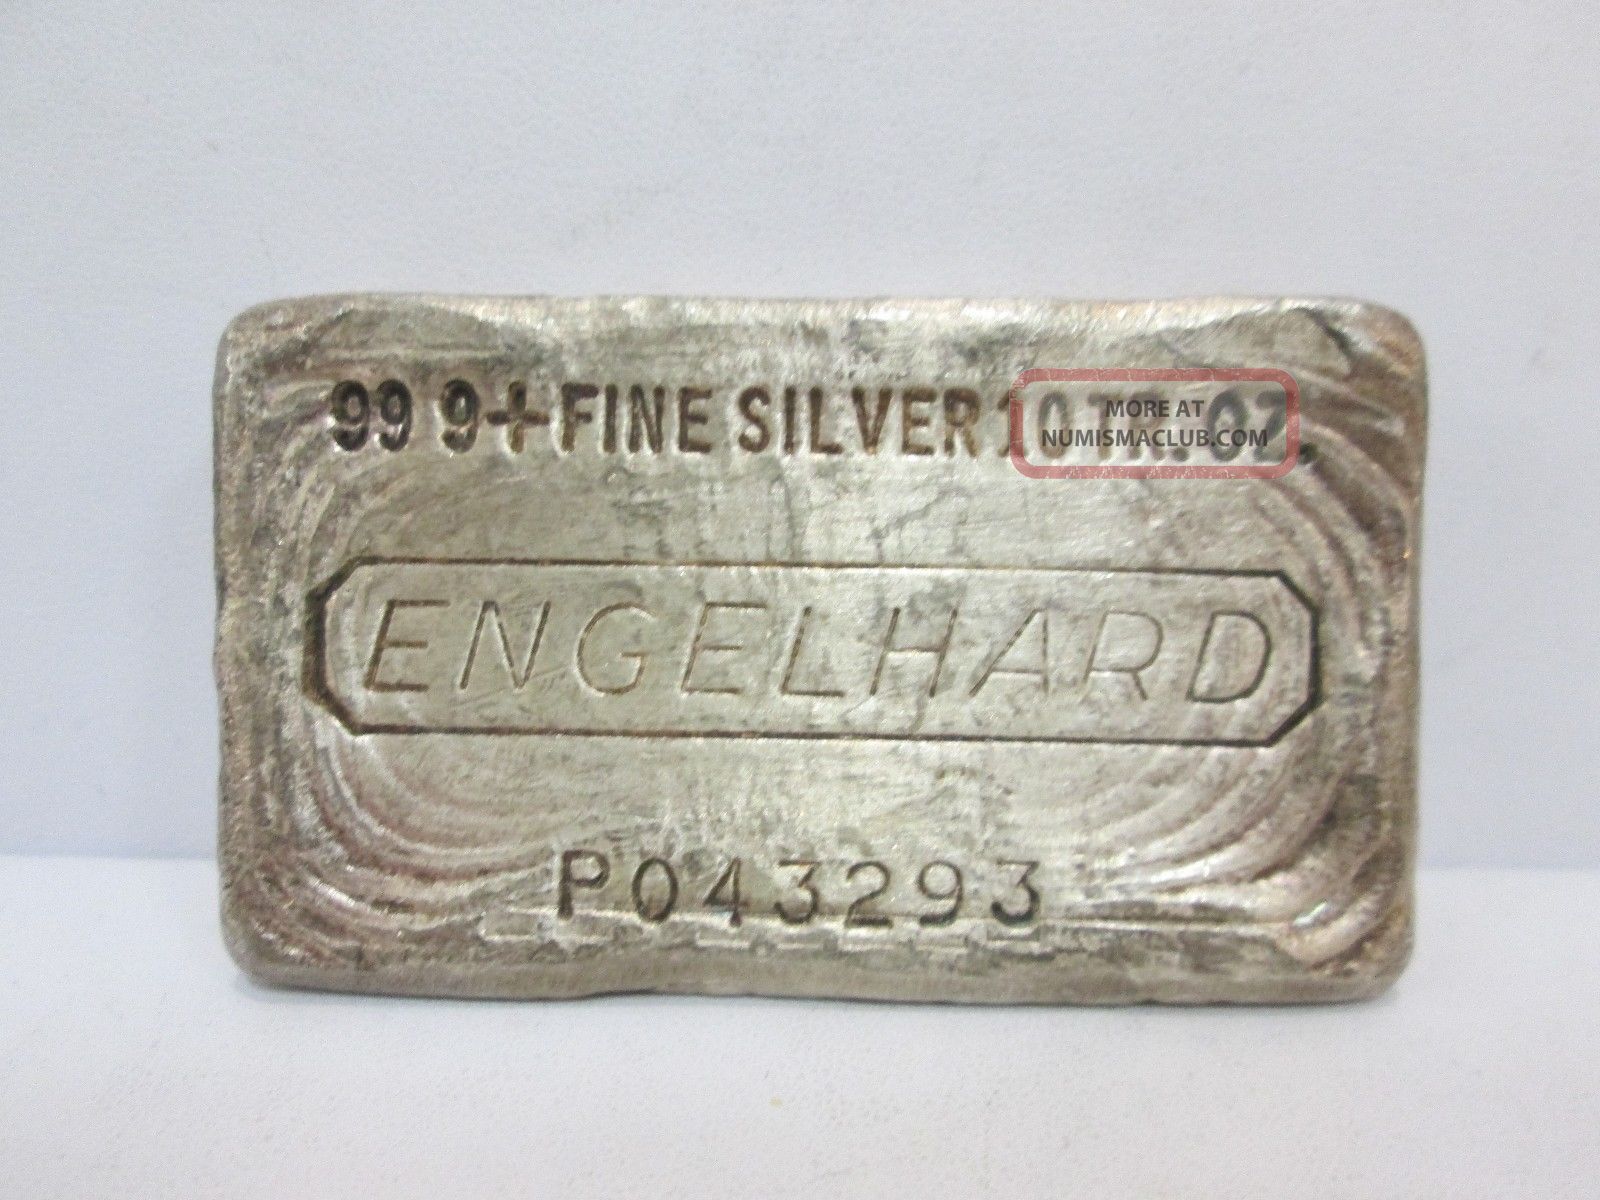 Engelhard -. 999 Fine Silver 10 Troy Ounce Bar